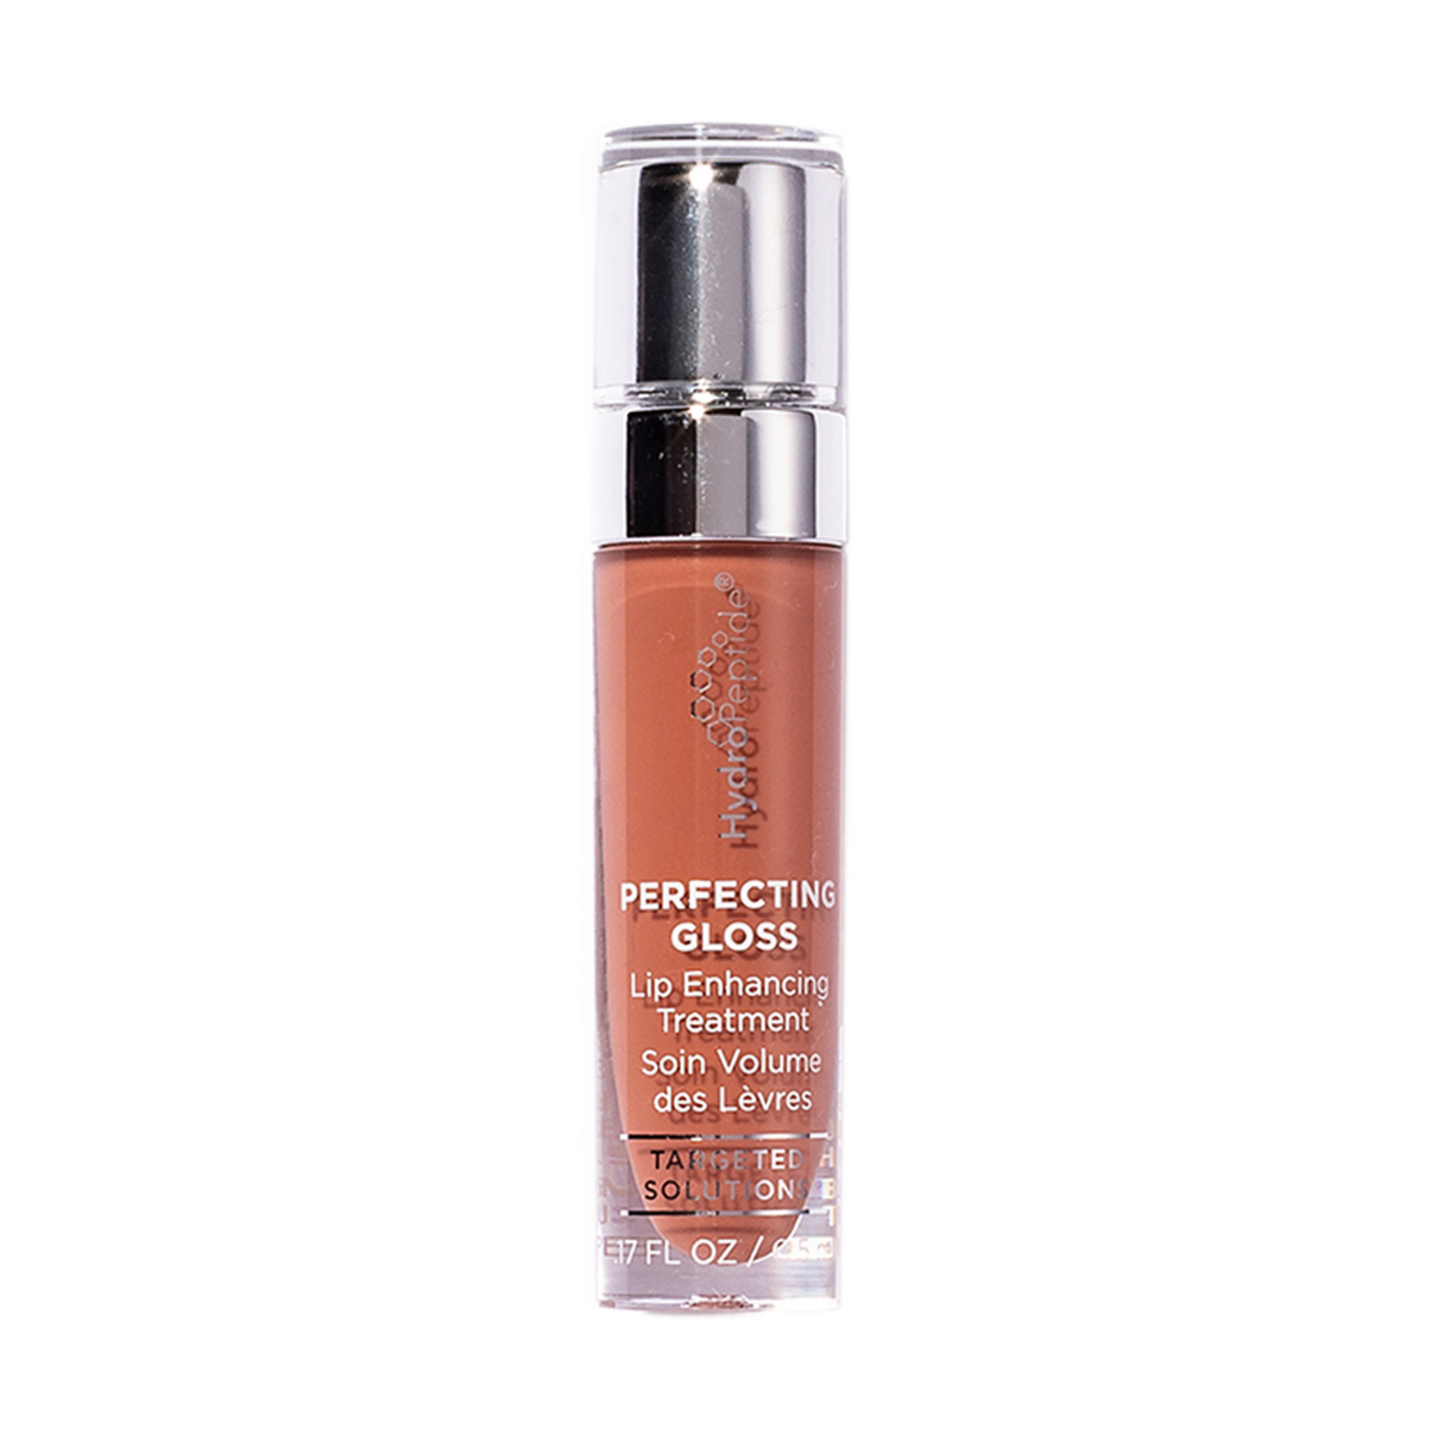 HydroPeptide Perfecting Gloss Traitement améliorant les lèvres 5 ml / 0,17 fl oz